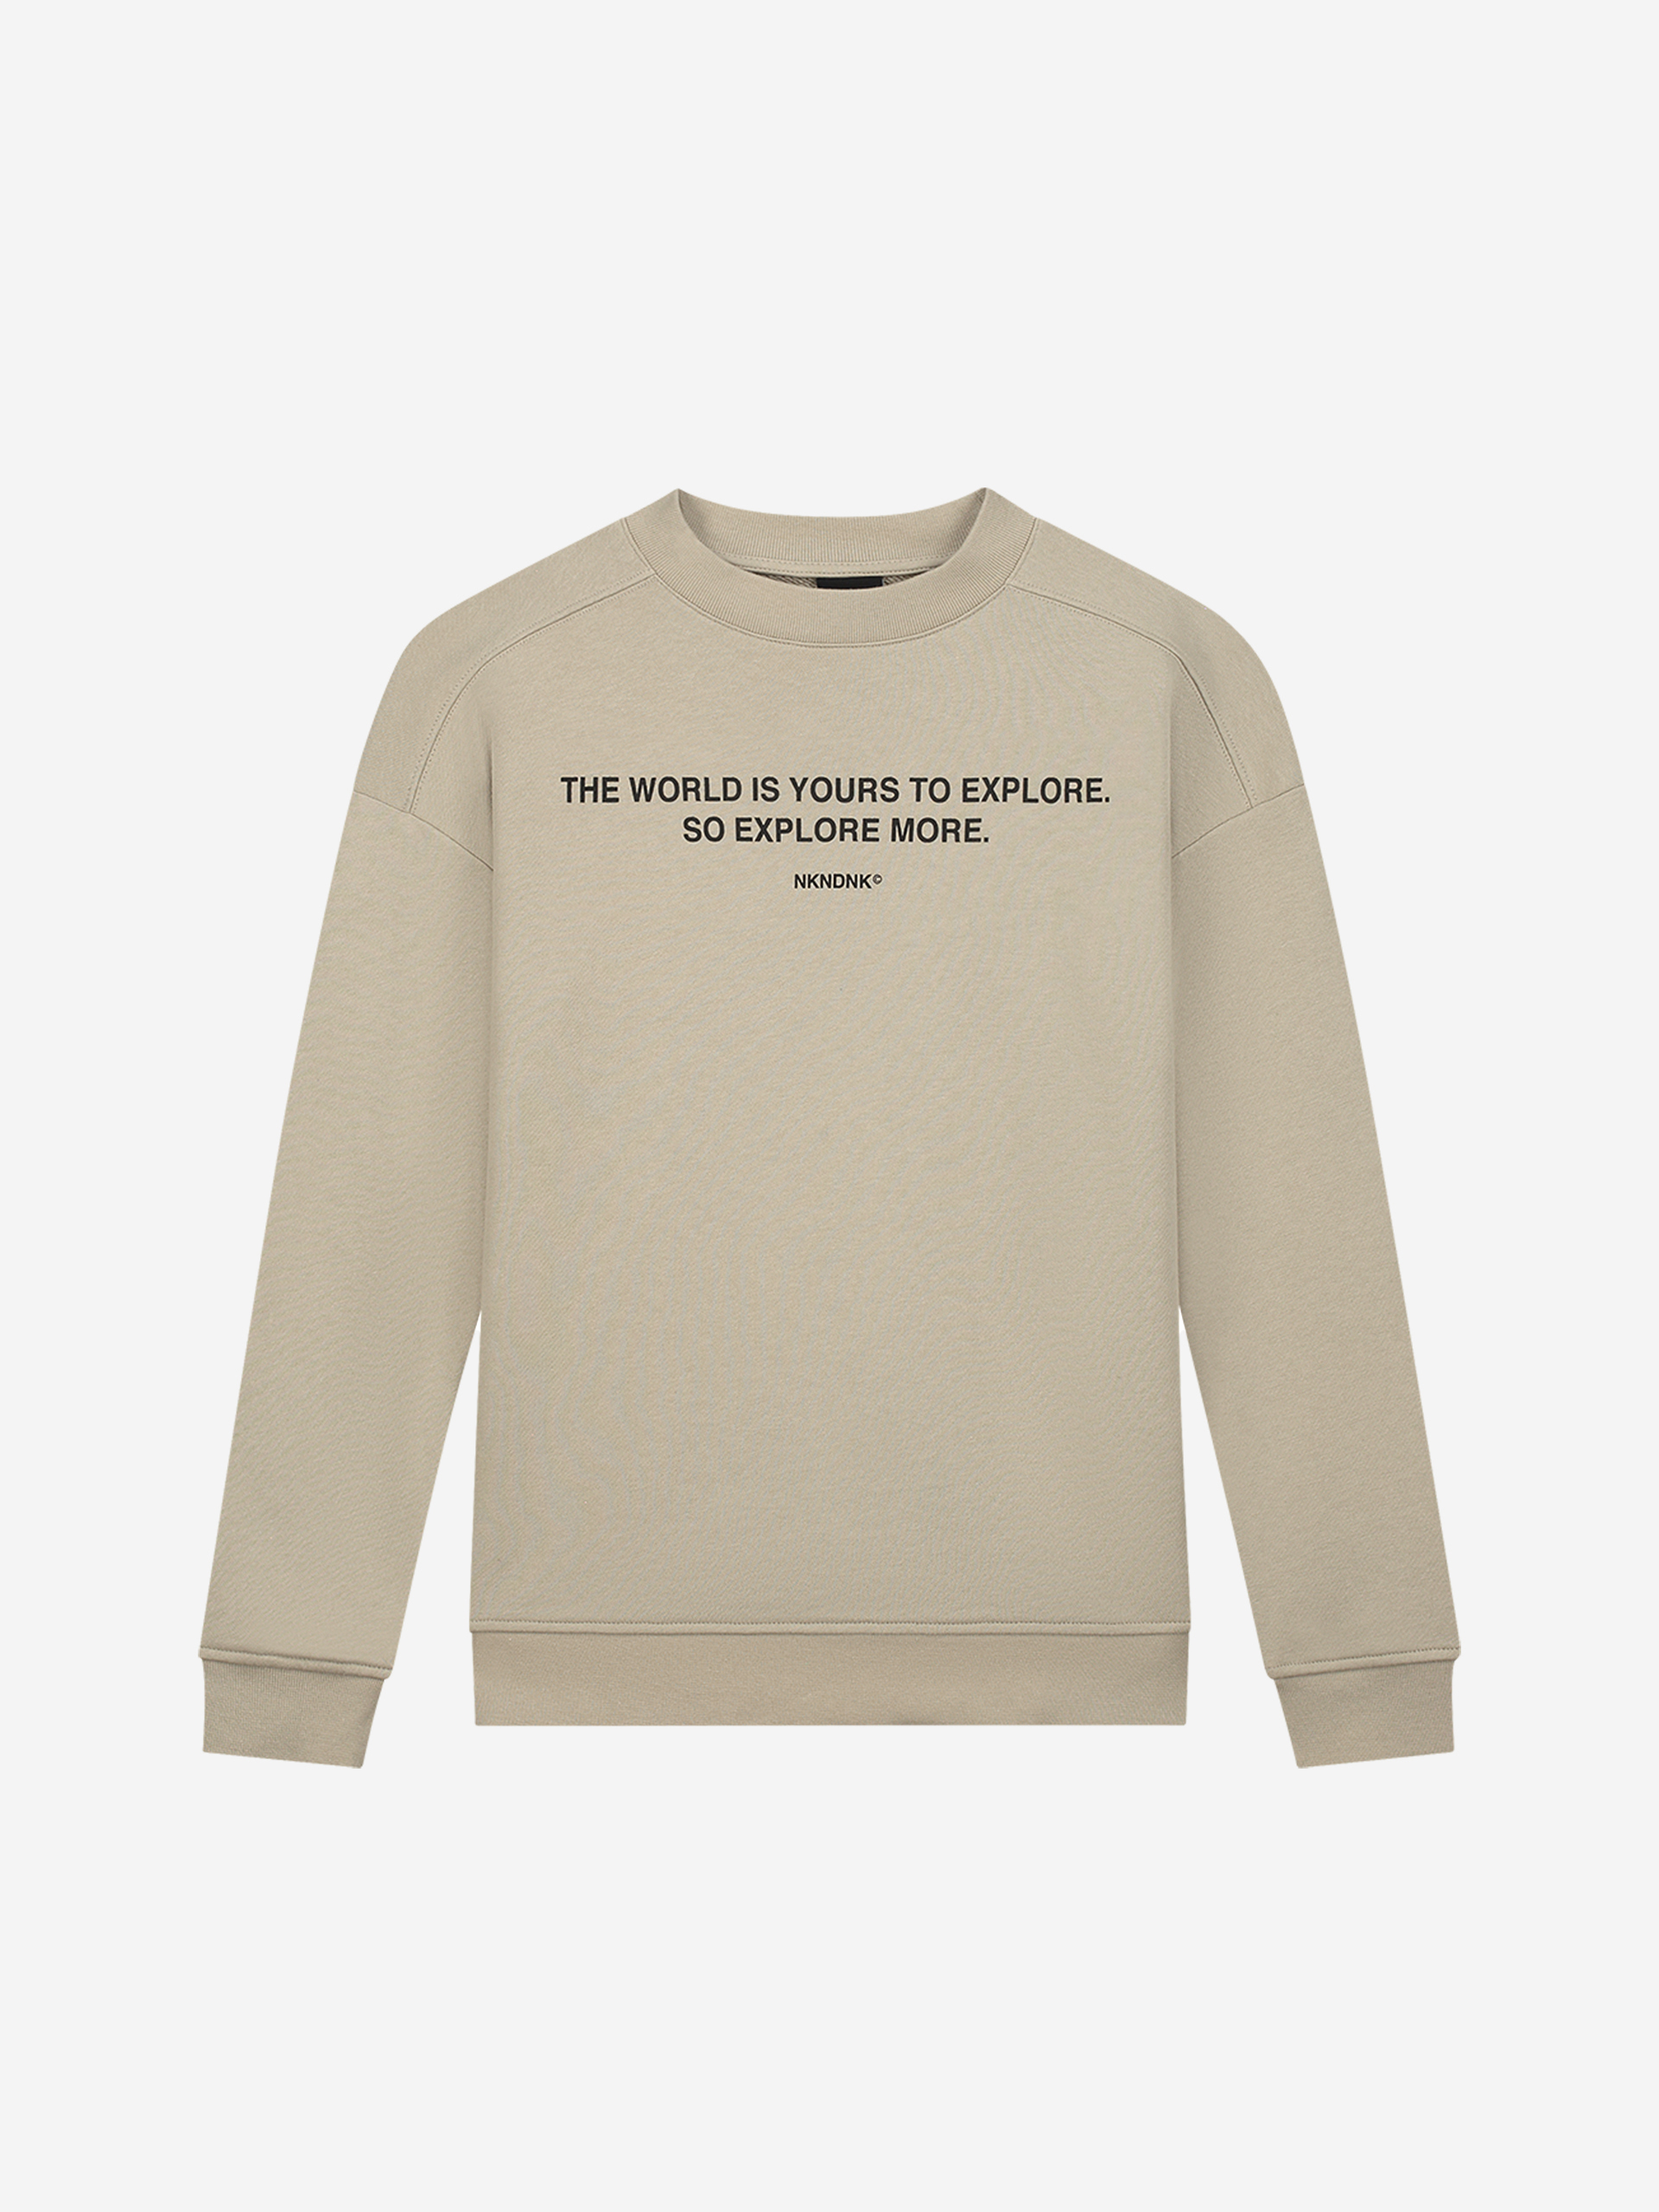 Sweatshirt with quote